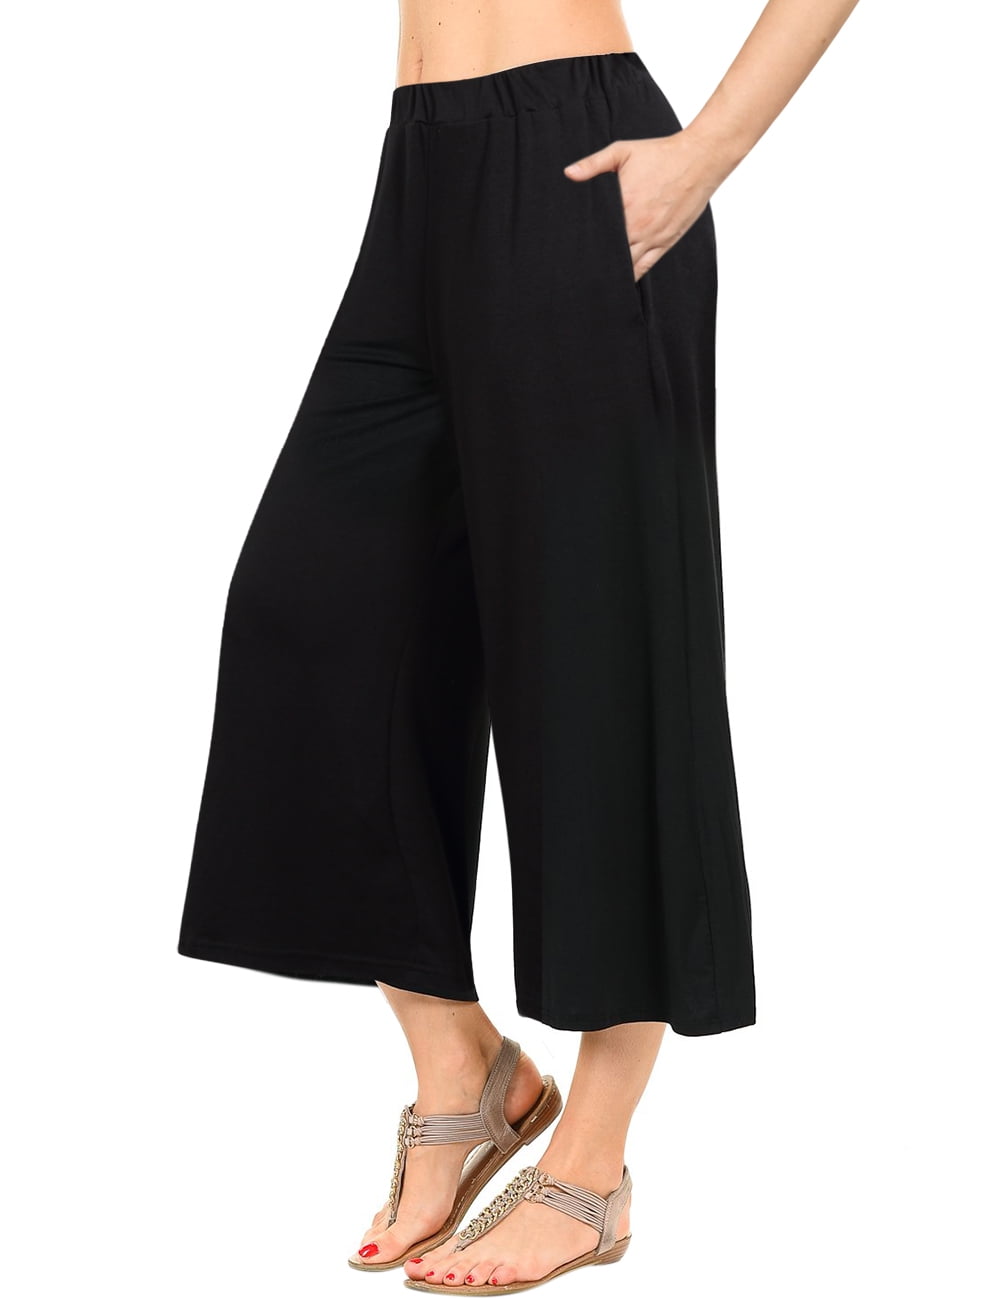 GlorySunshine Womens Yoga Pants Elastic Waist Solid Palazzo Casual Wide Leg Lounge Pants with Pockets